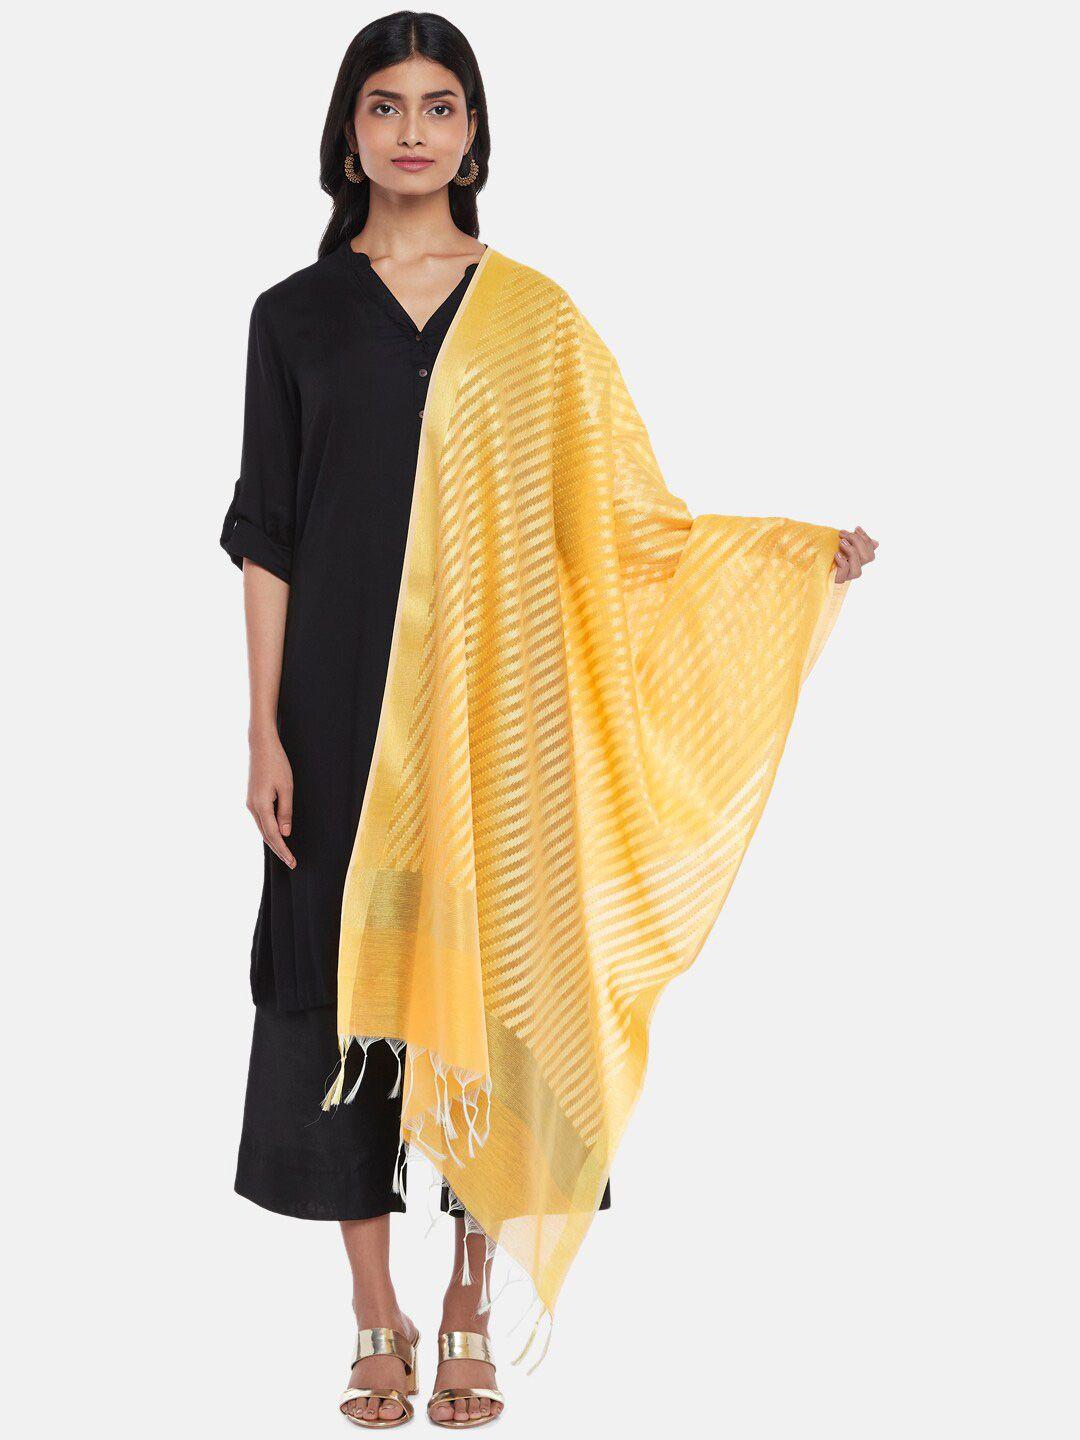 rangmanch by pantaloons women yellow striped dupatta with zari